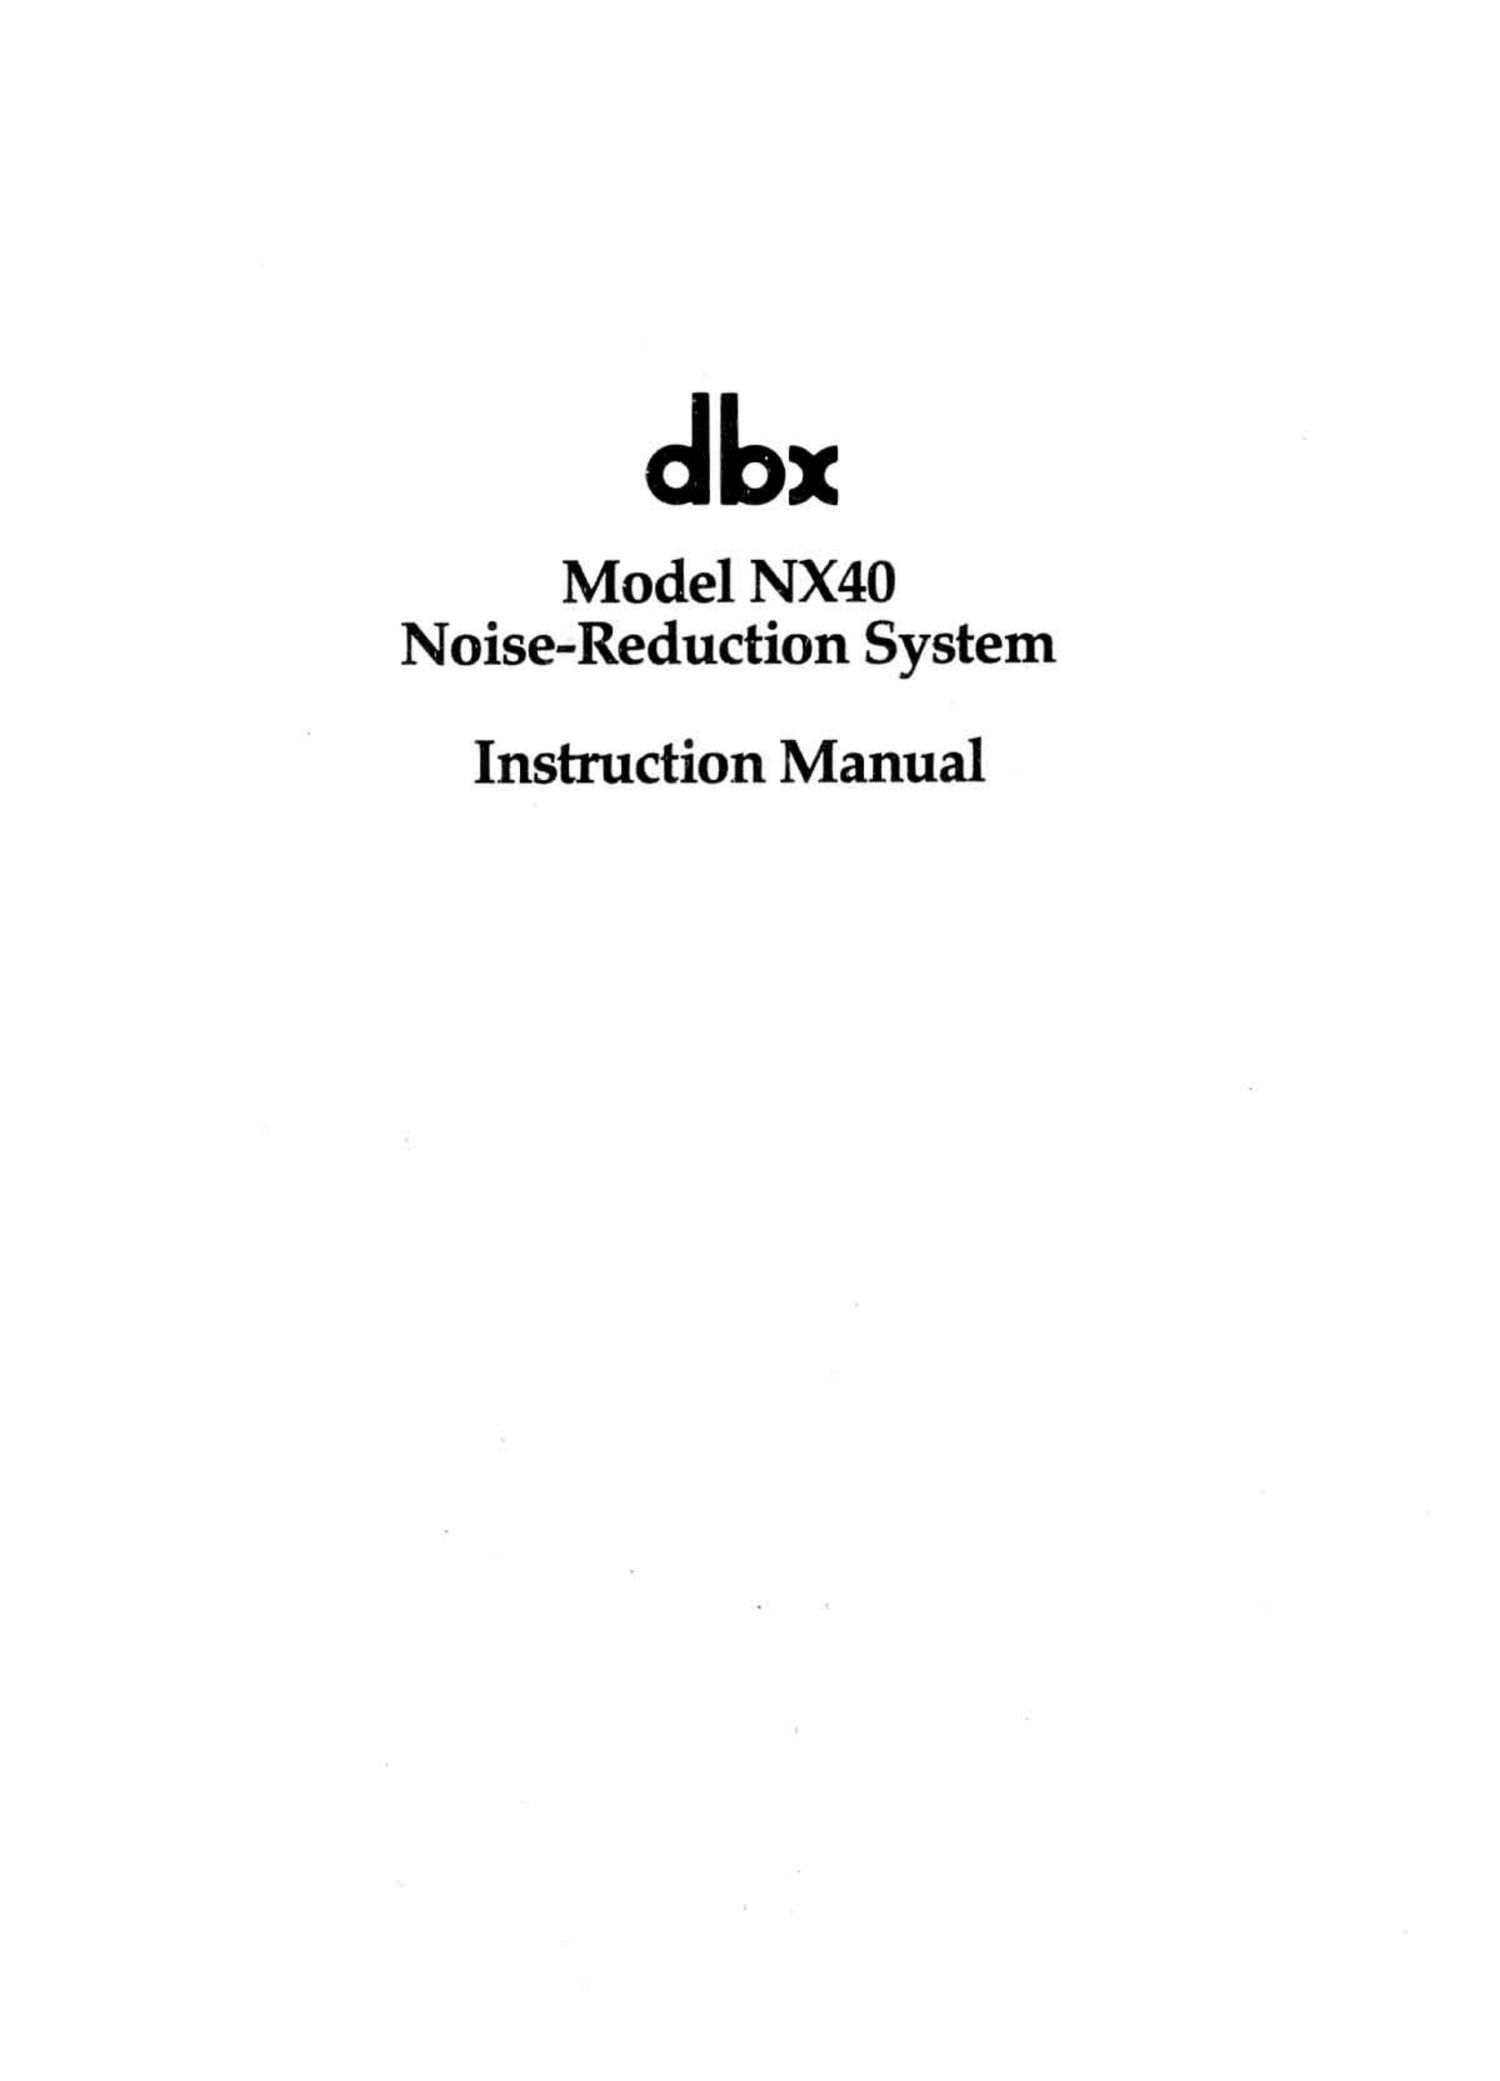 dbx nx 40 owners manual